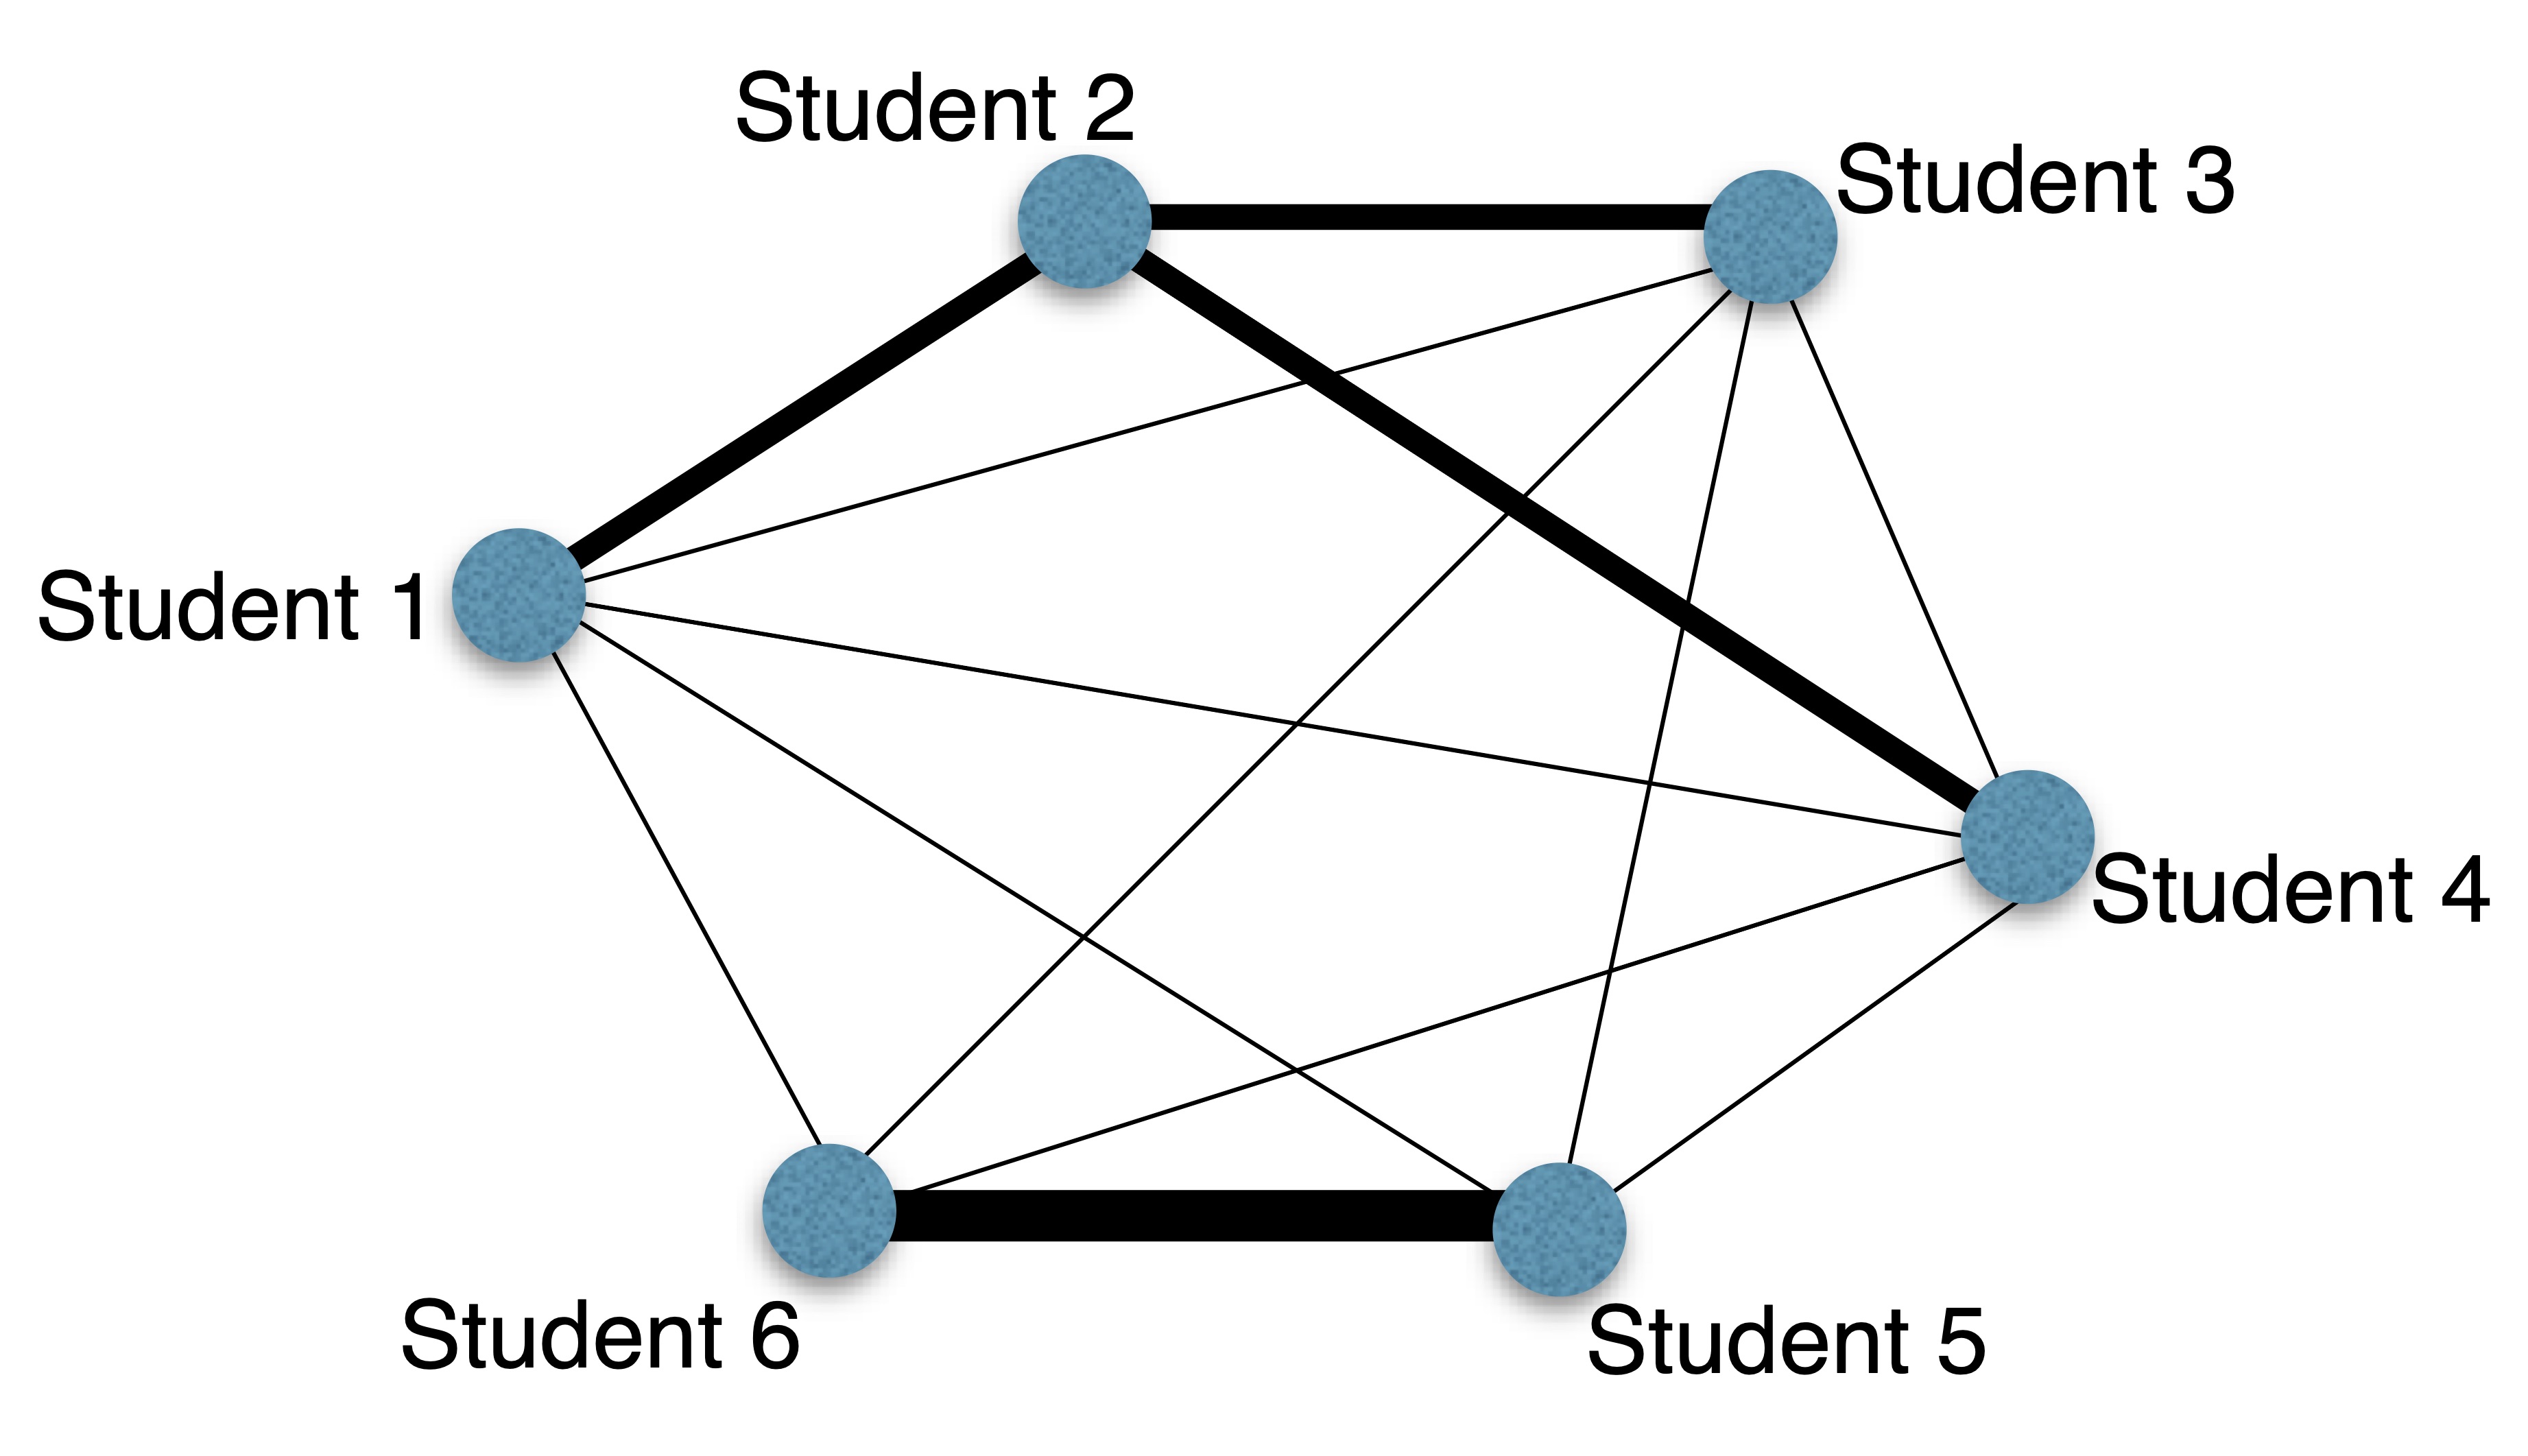 Network of Student Team Membership